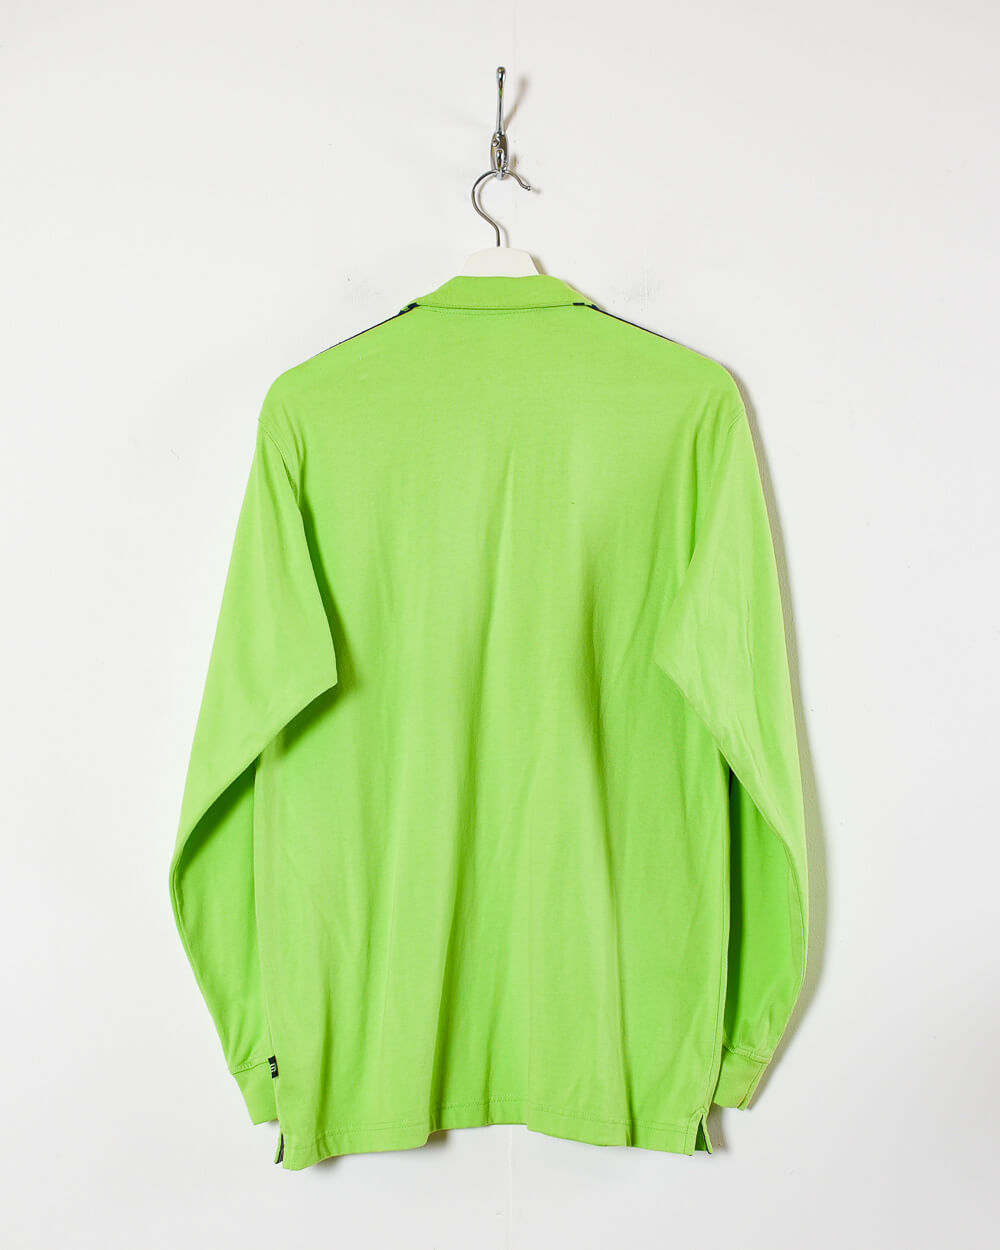 Green Adidas 1/4 Zip Sweatshirt - Large